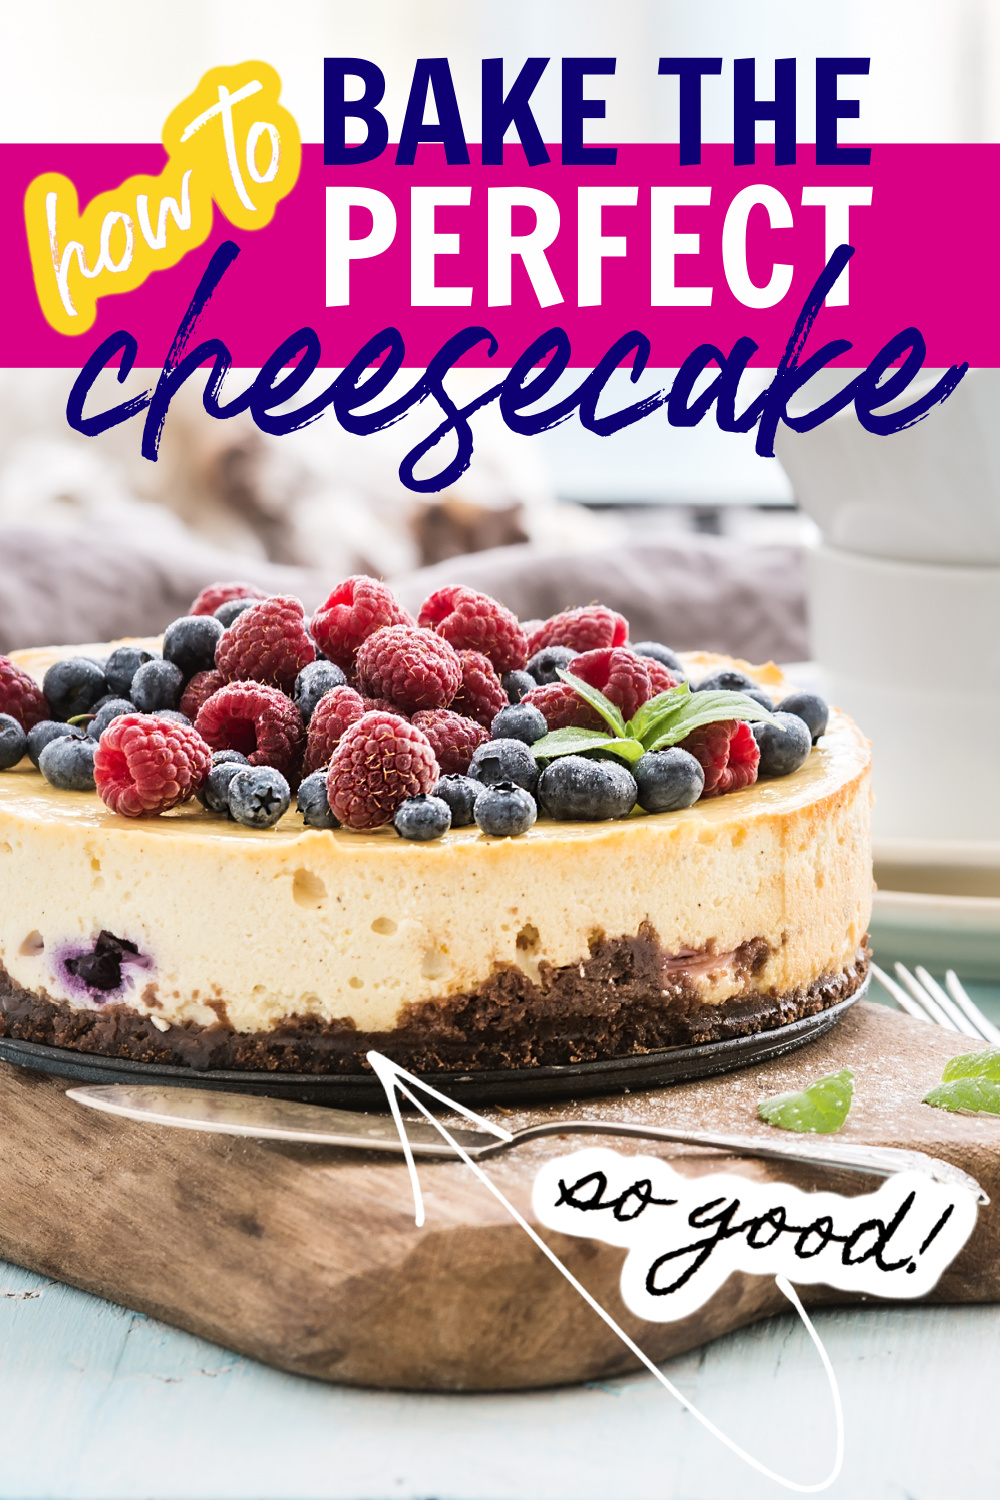  Bake the Perfect Cheesecake